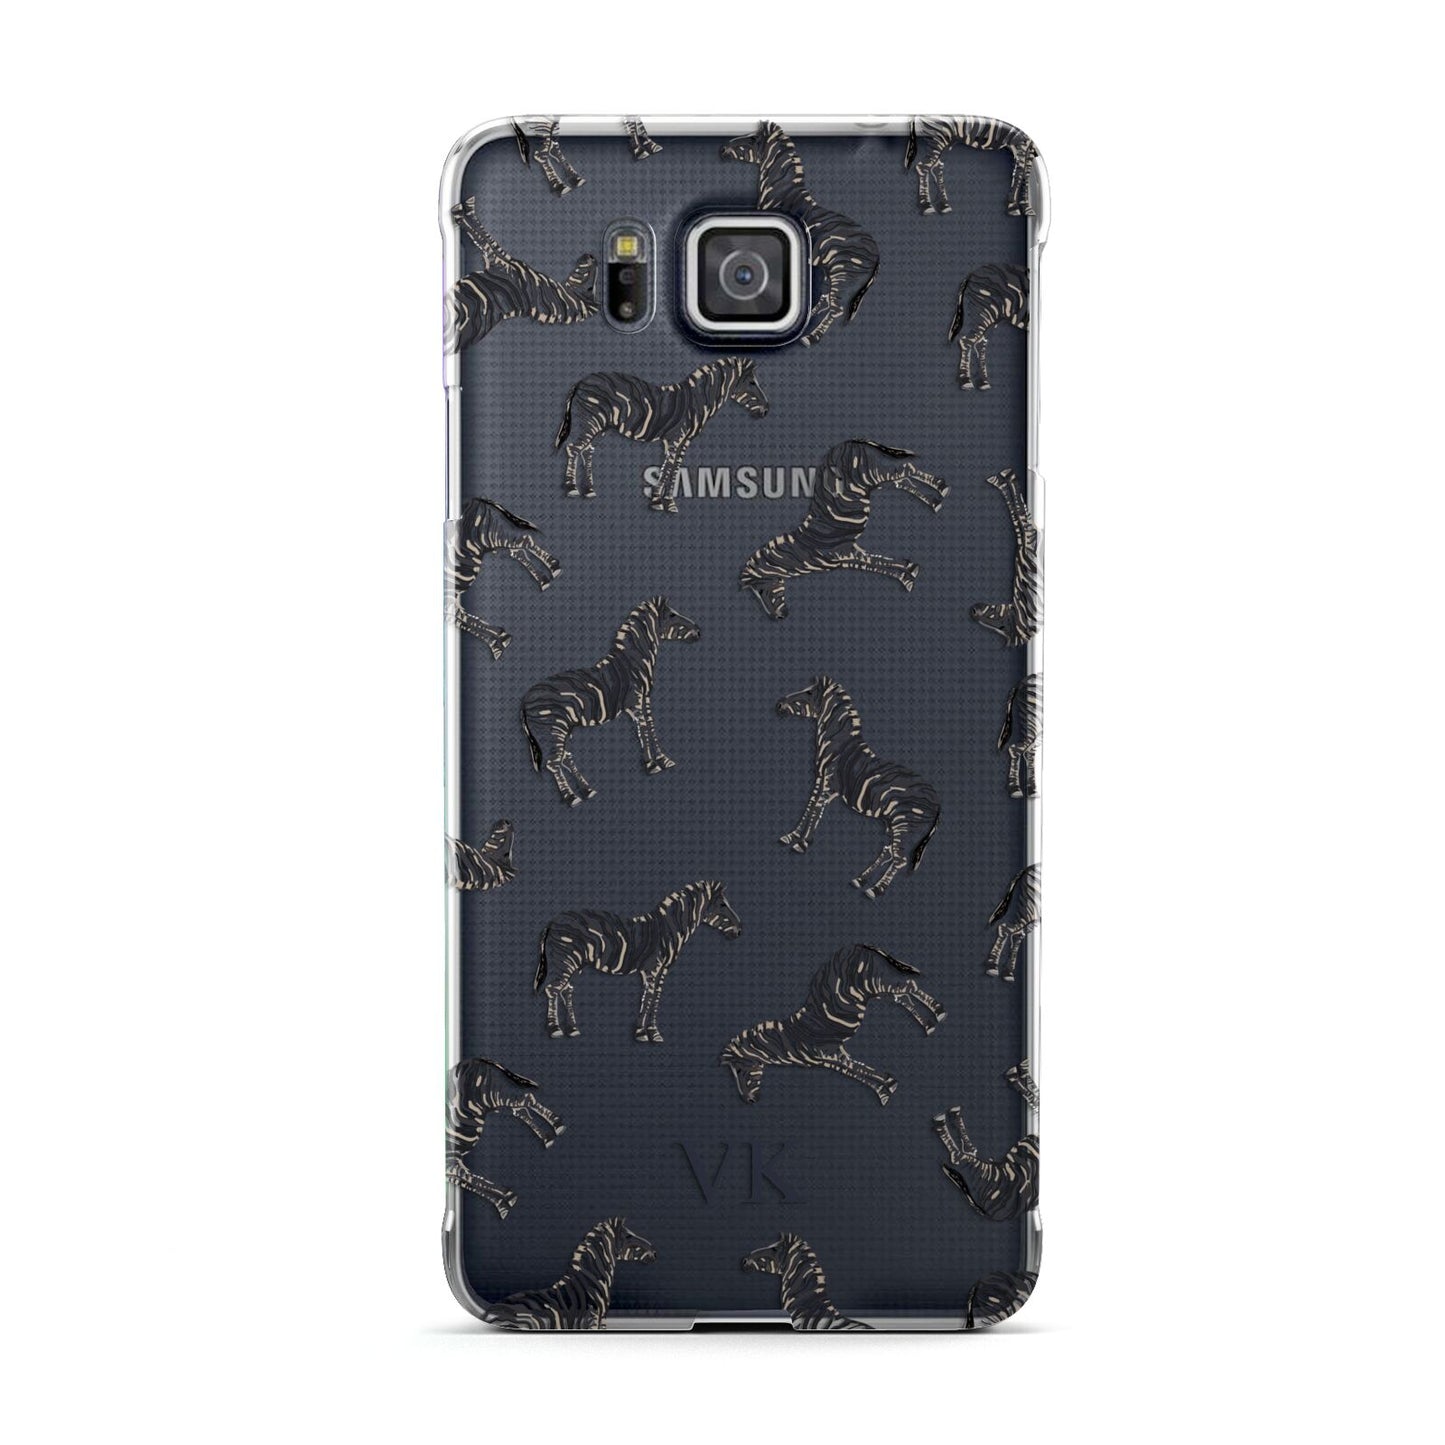 Personalised Zebra Samsung Galaxy Alpha Case